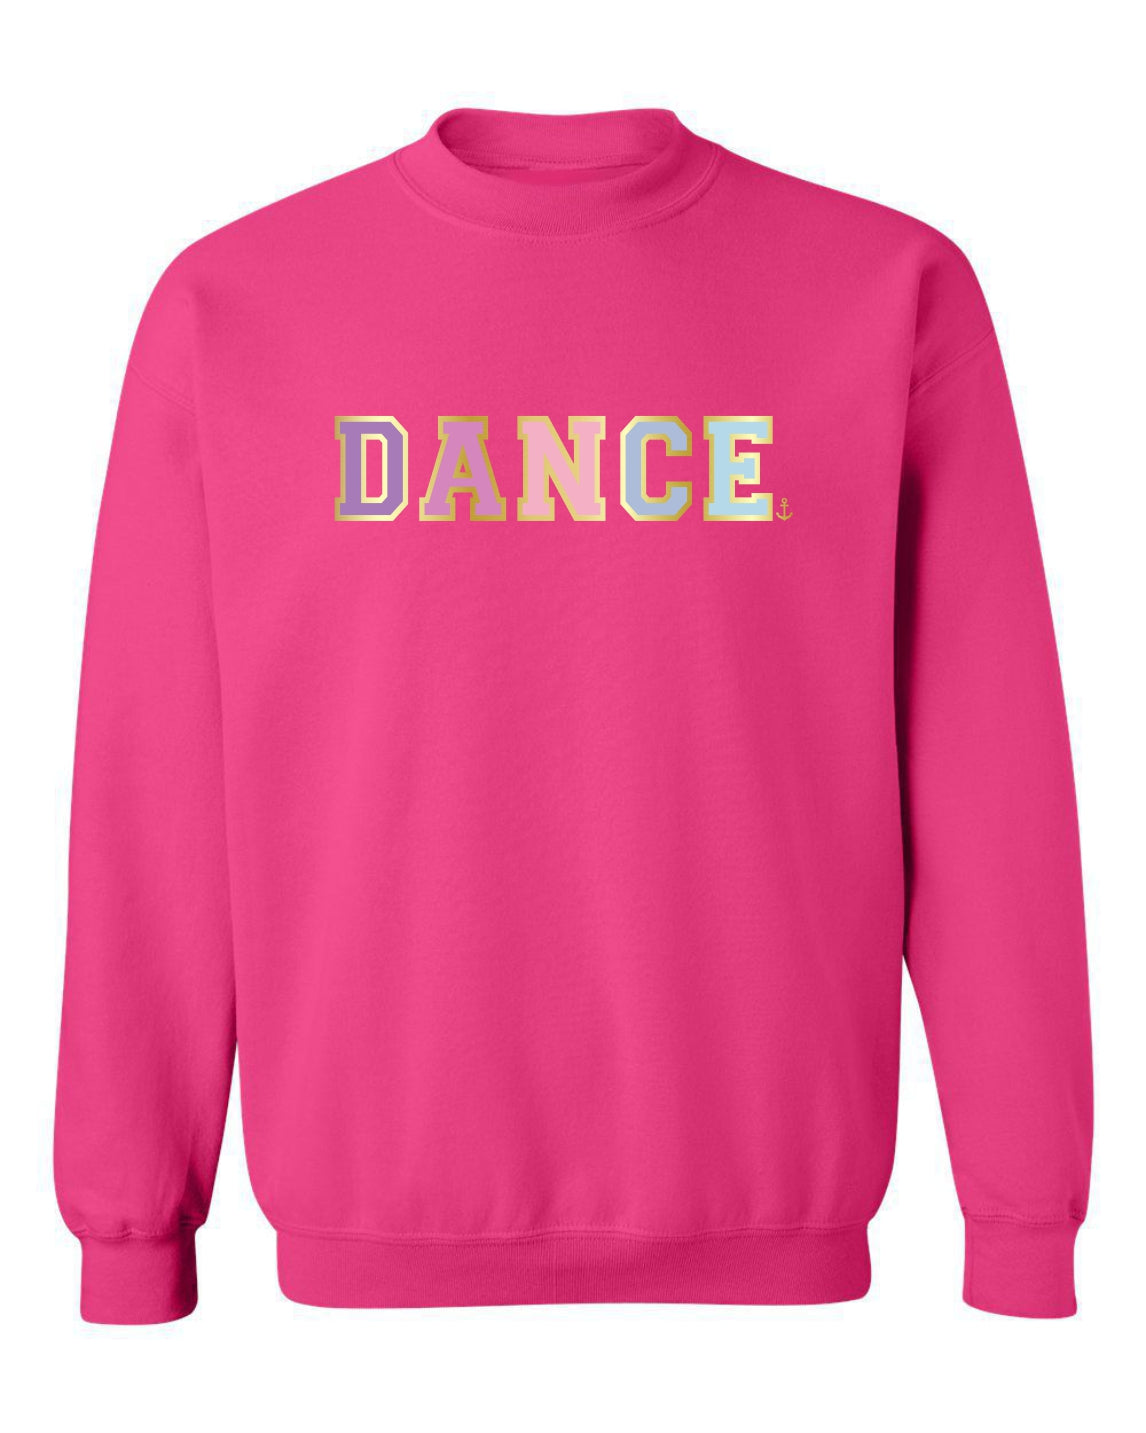 "Dance" Varsity Unisex Crewneck Sweatshirt